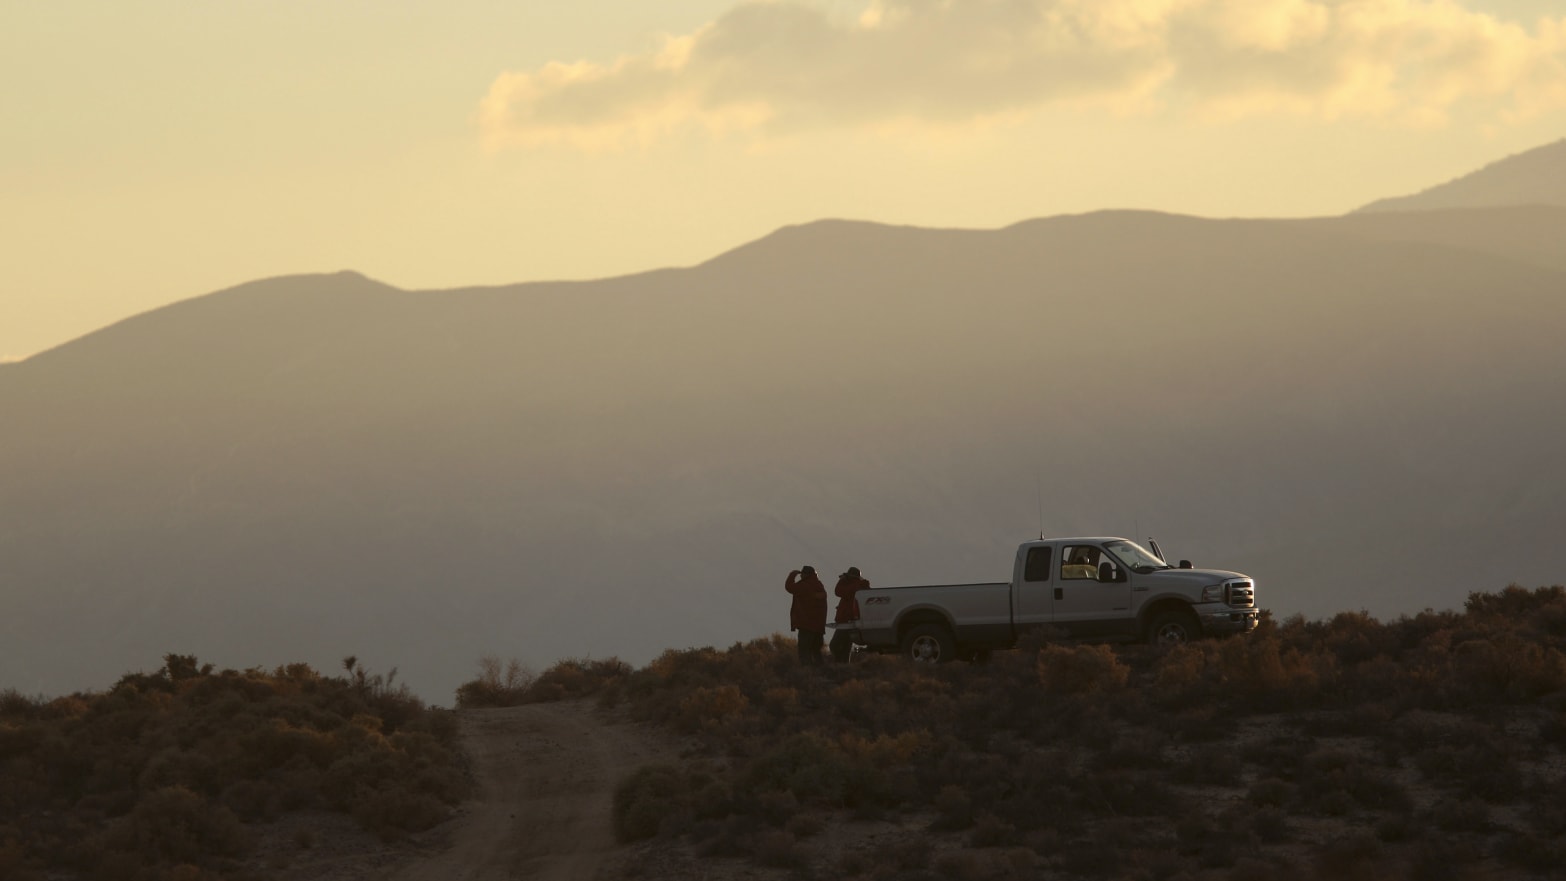 Sheriff’s deputies near an unmarked pickup truck in California’s Mojave Desert.